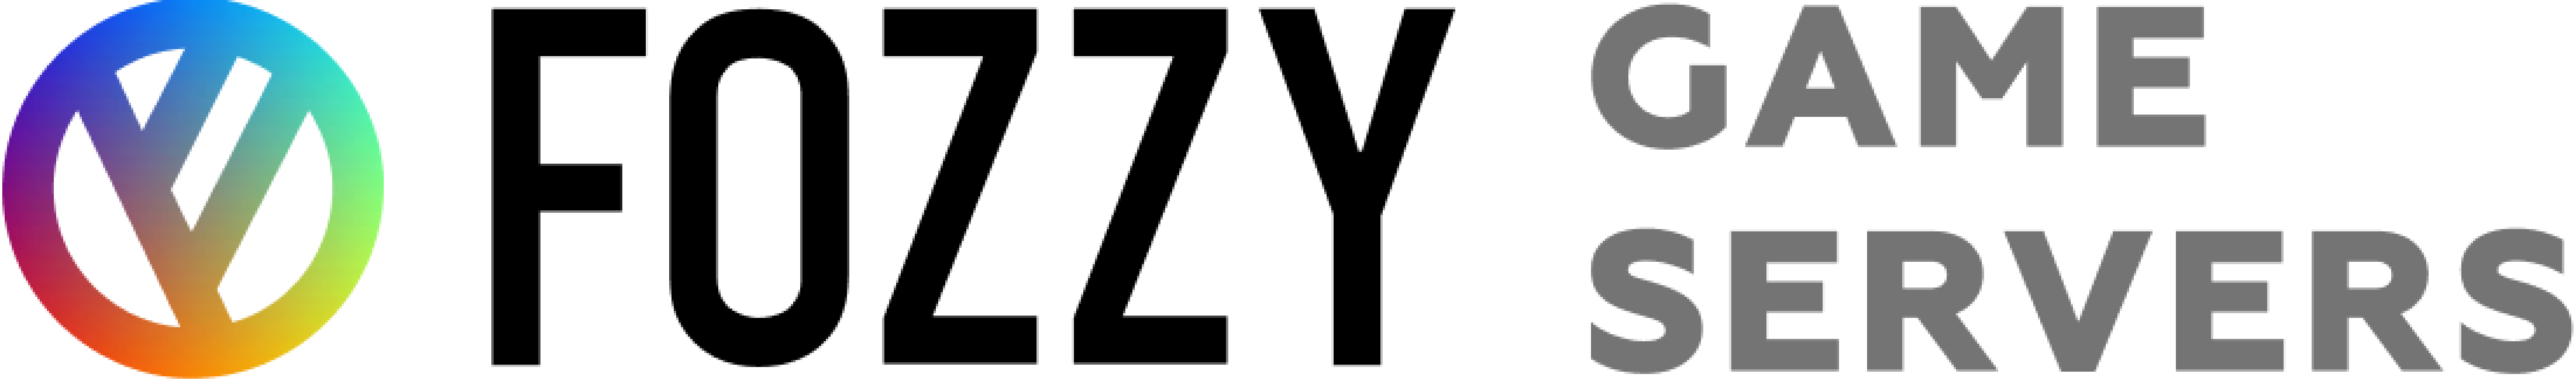 fozzy-game-servers-dark-logo